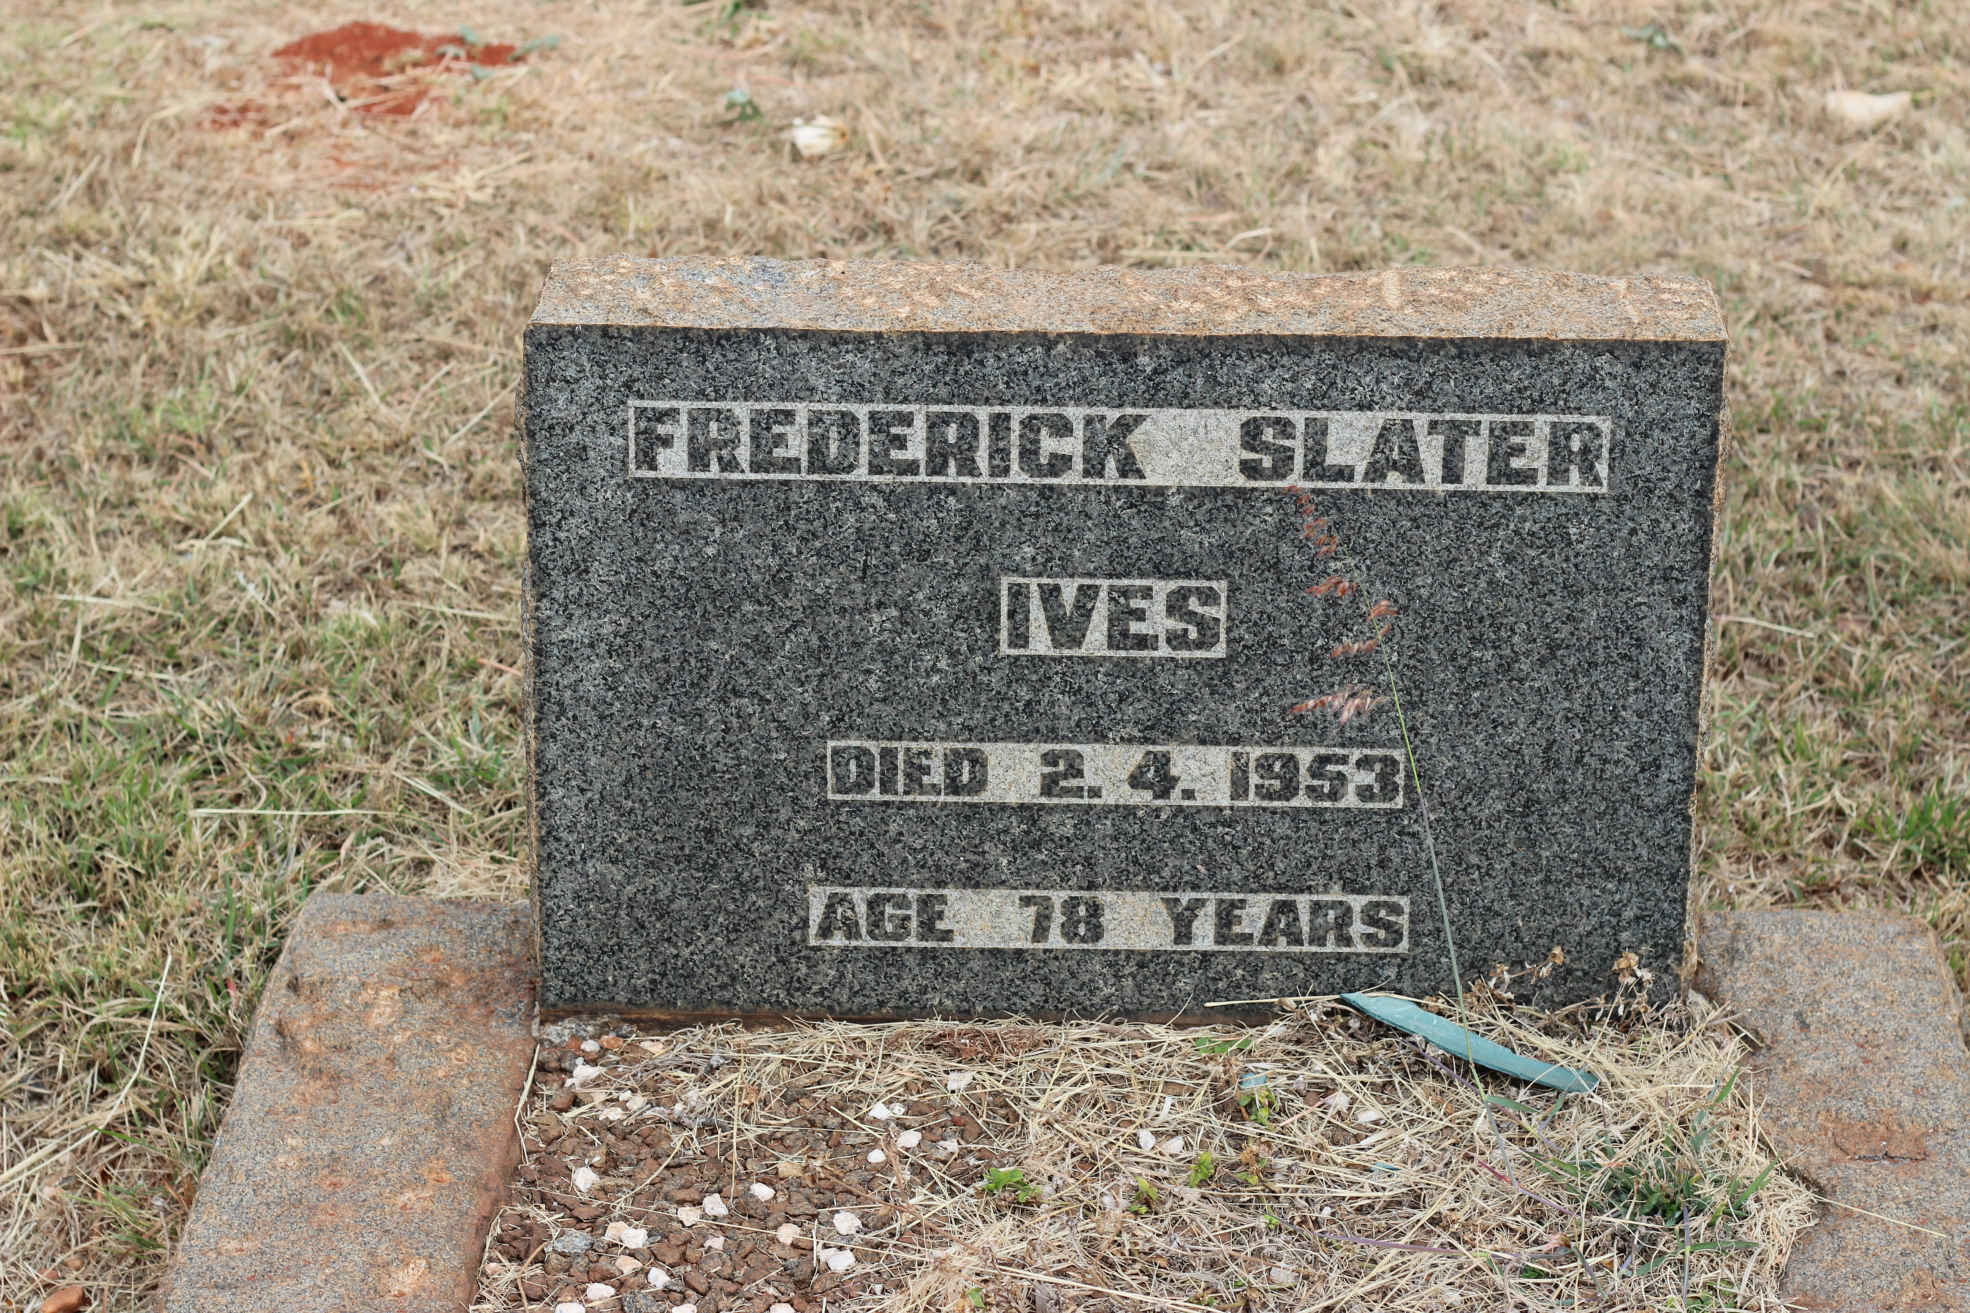 IVES Frederick Slater -1953